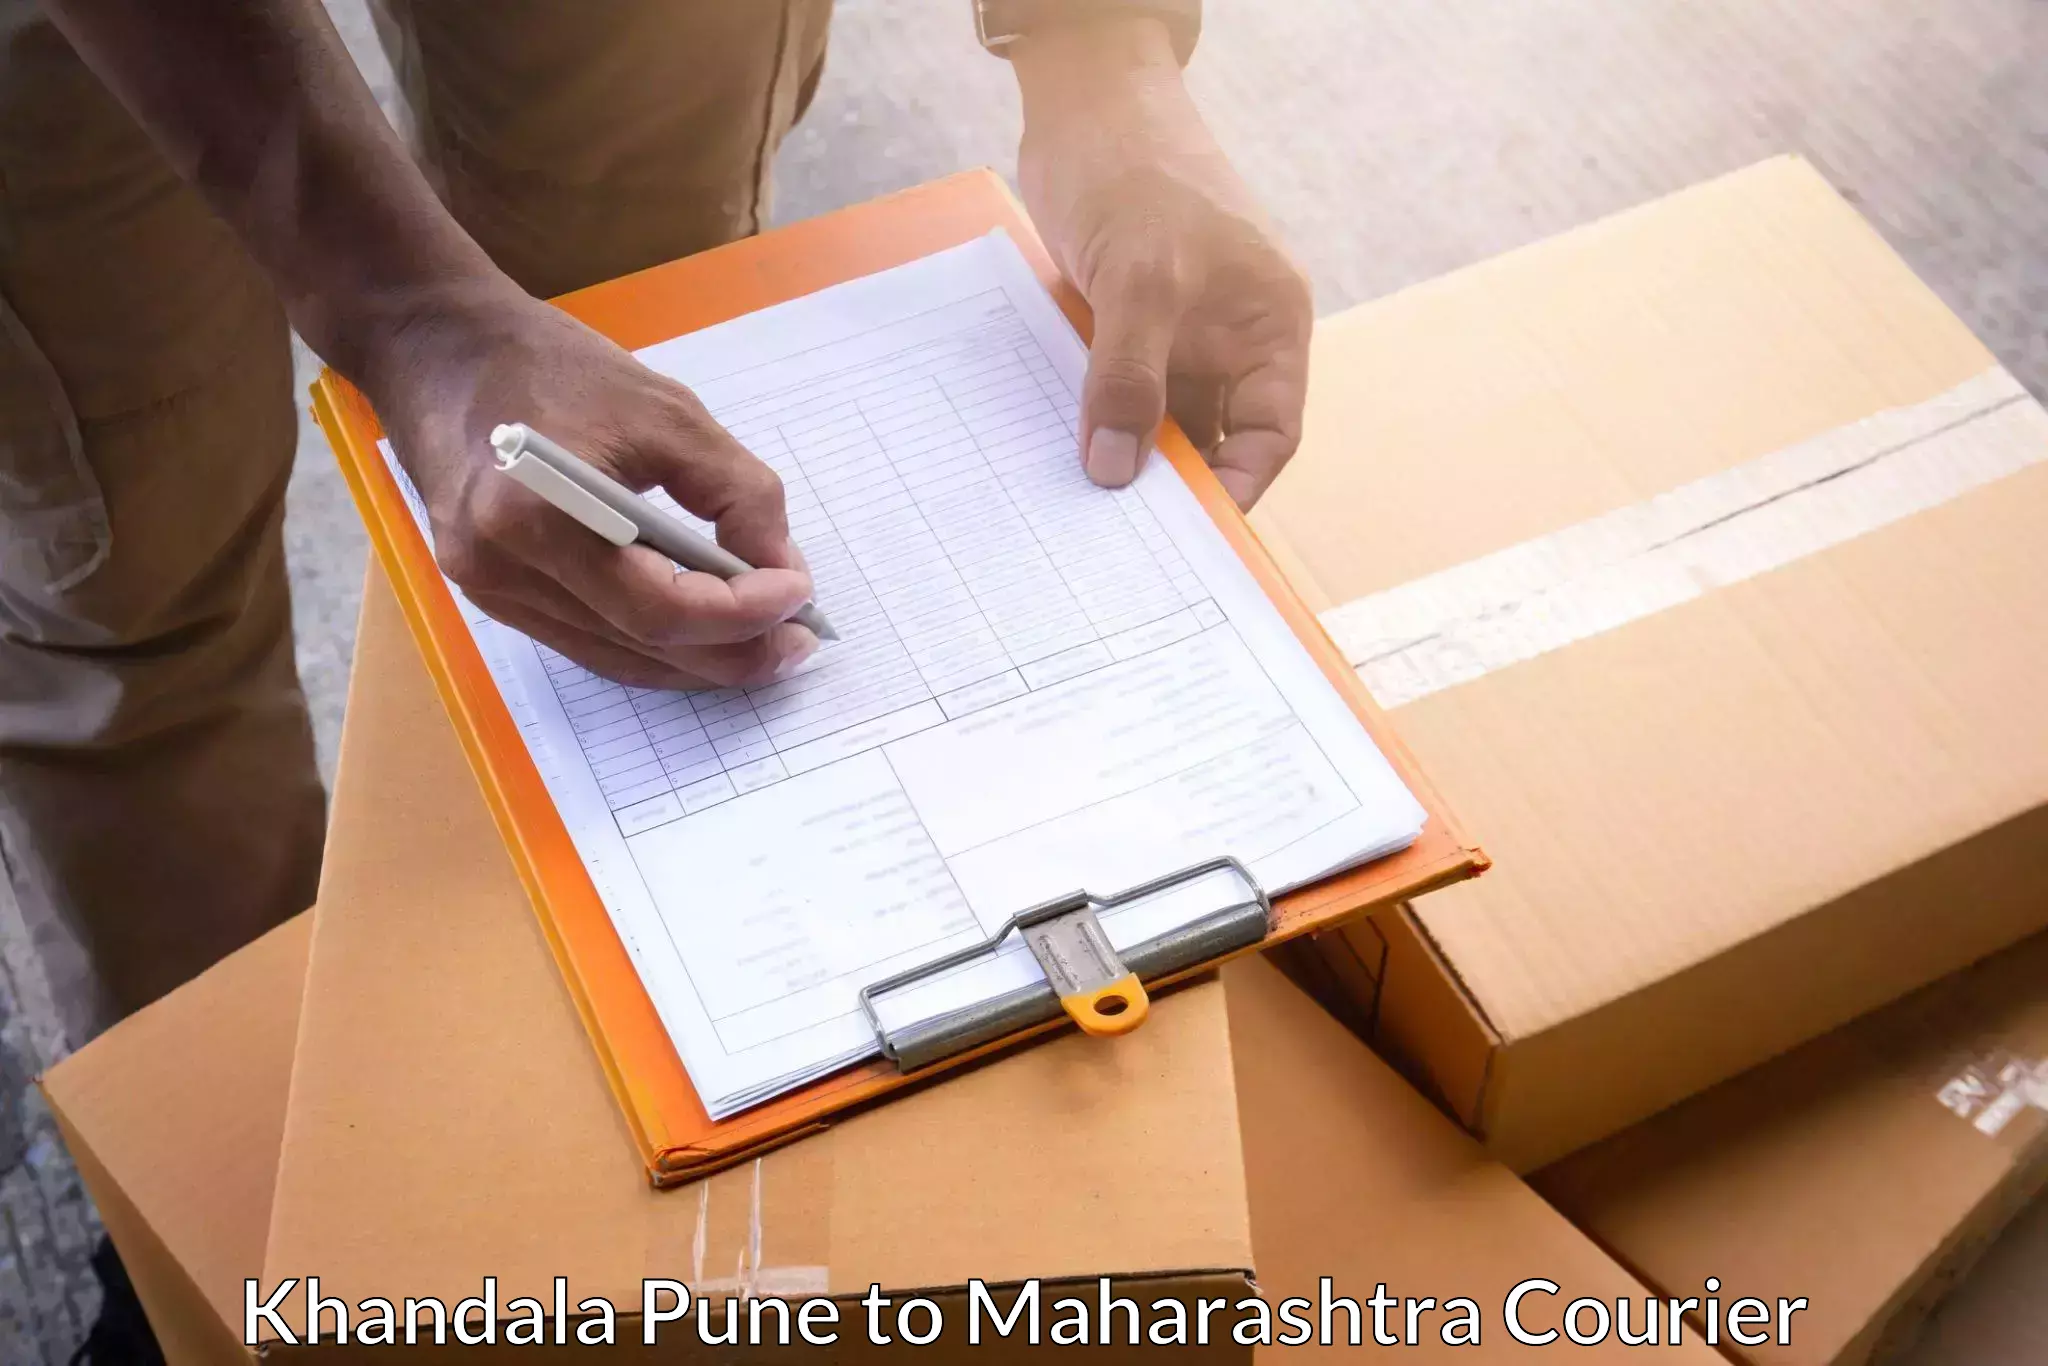 Seamless shipping service Khandala Pune to Maharashtra